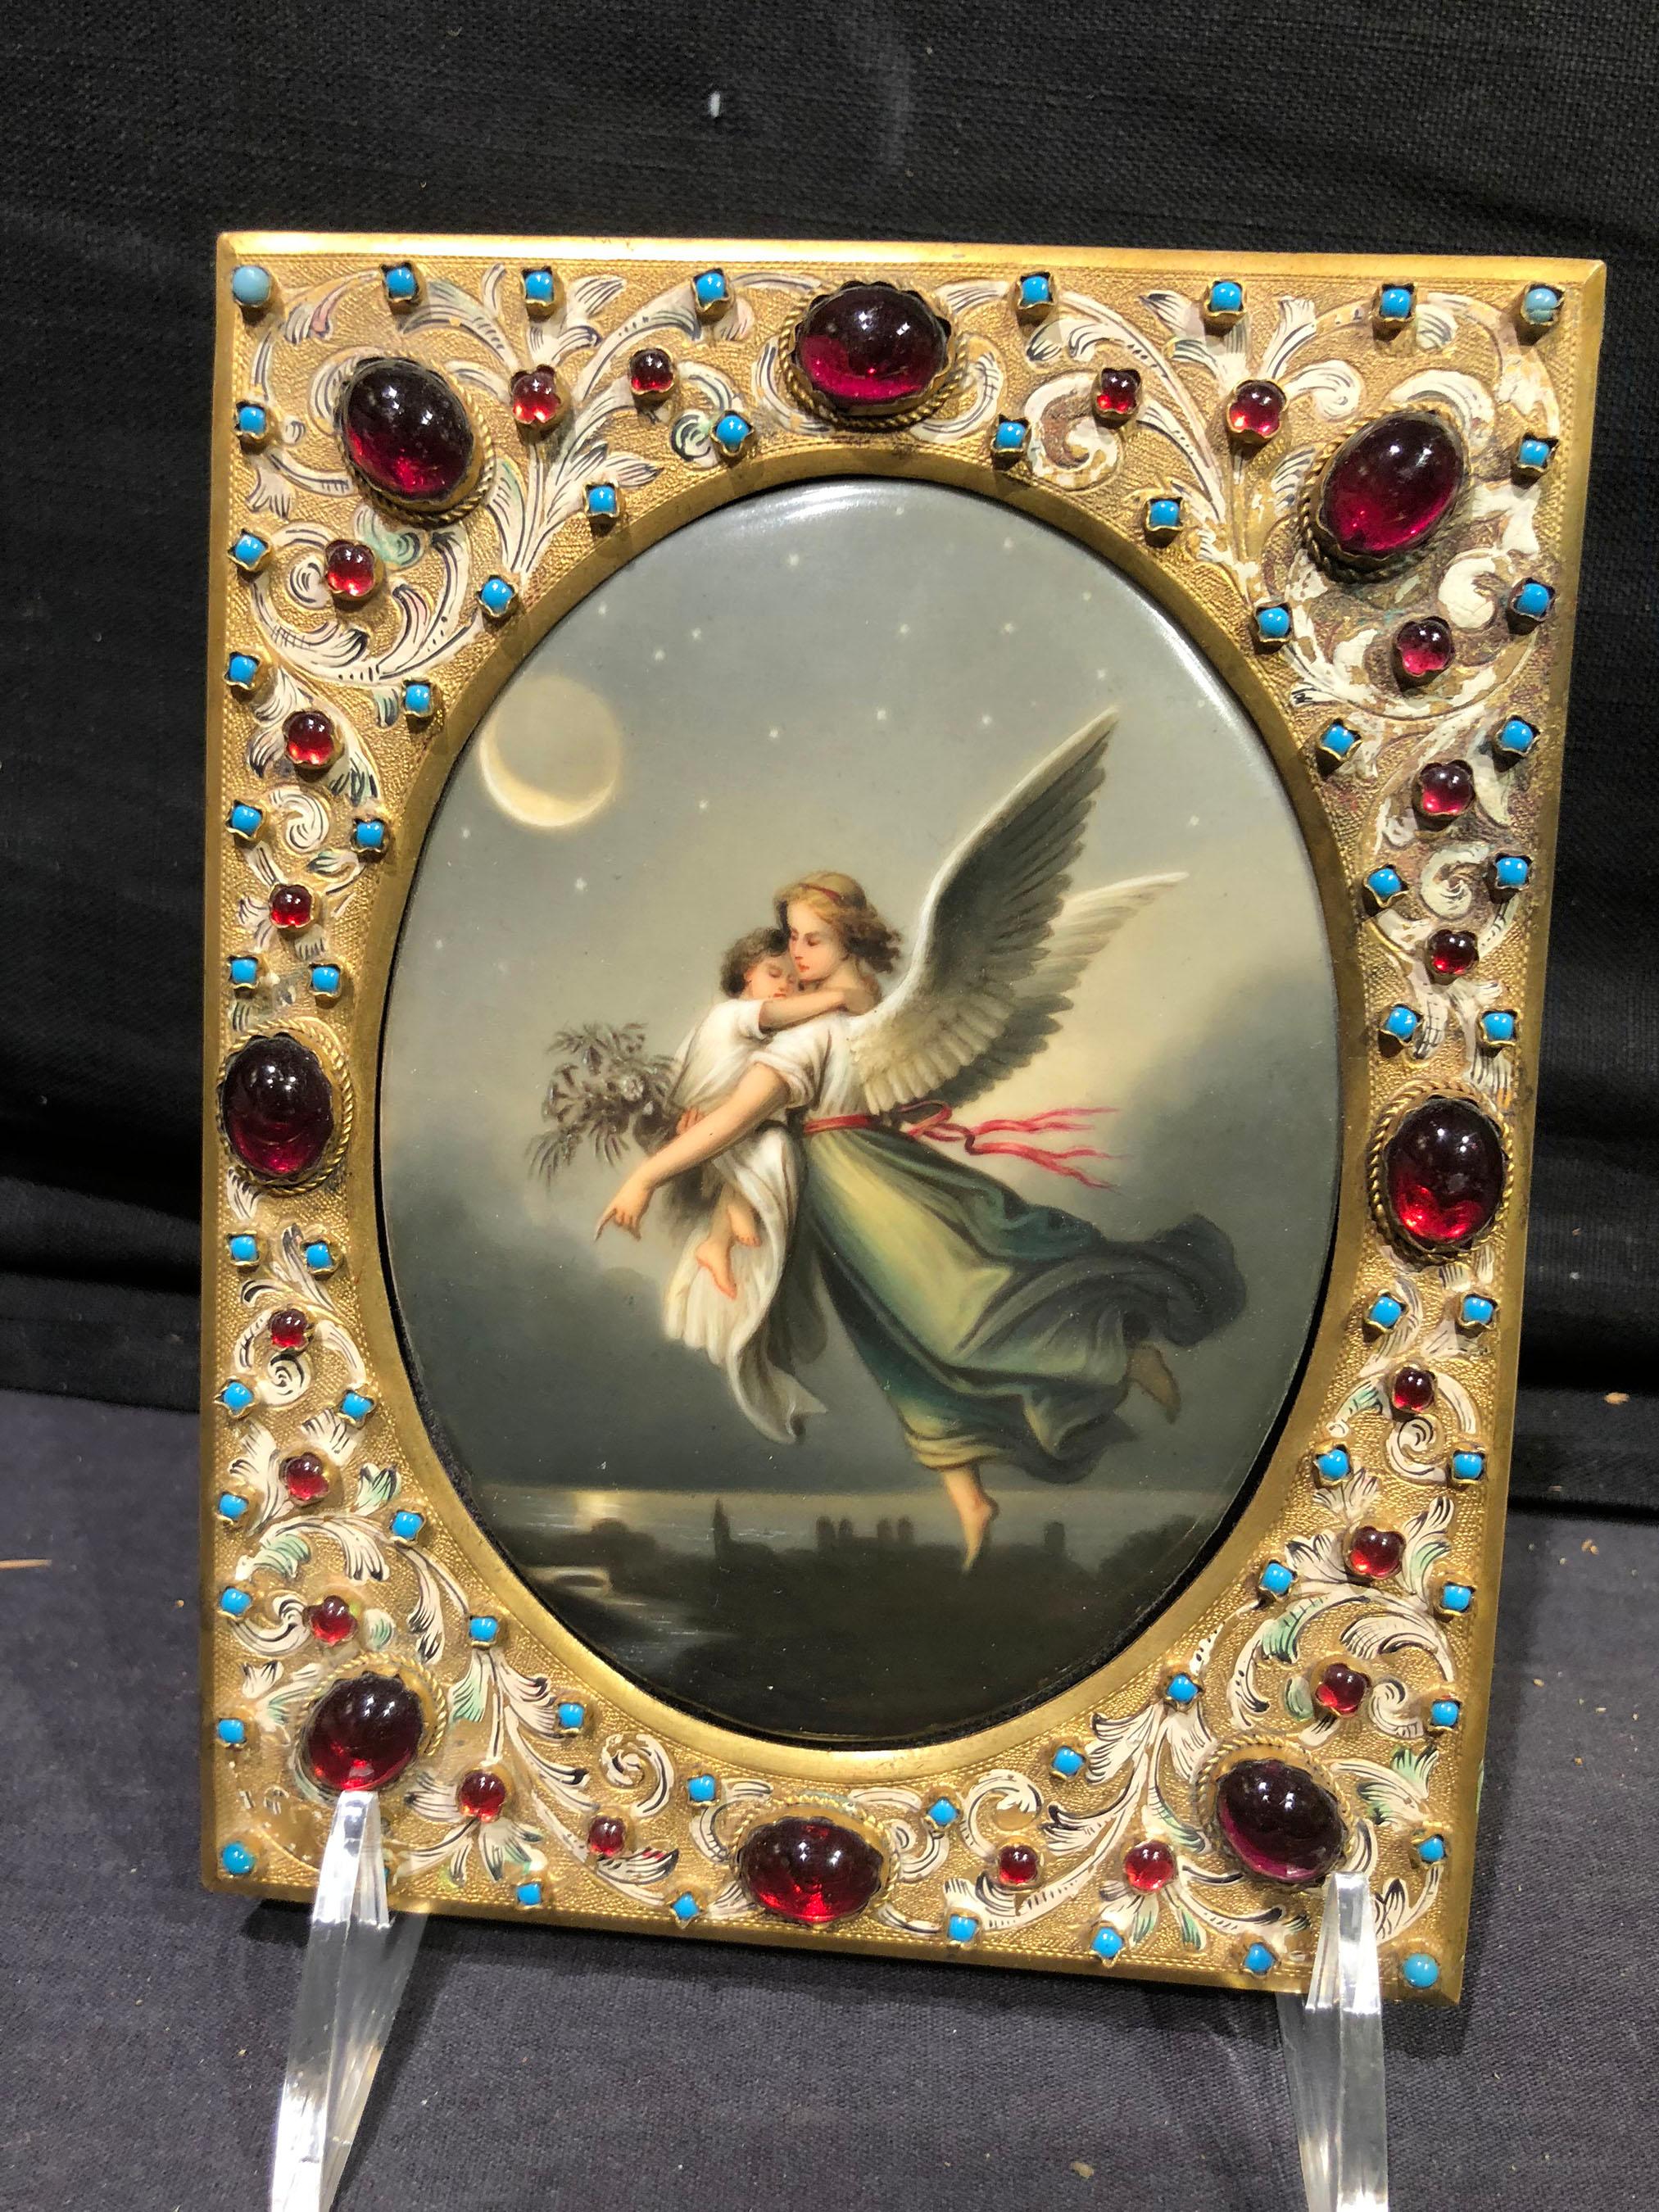 The Guardian Angel - Painting by Königliche Porzellan-Manufaktur (KPM)